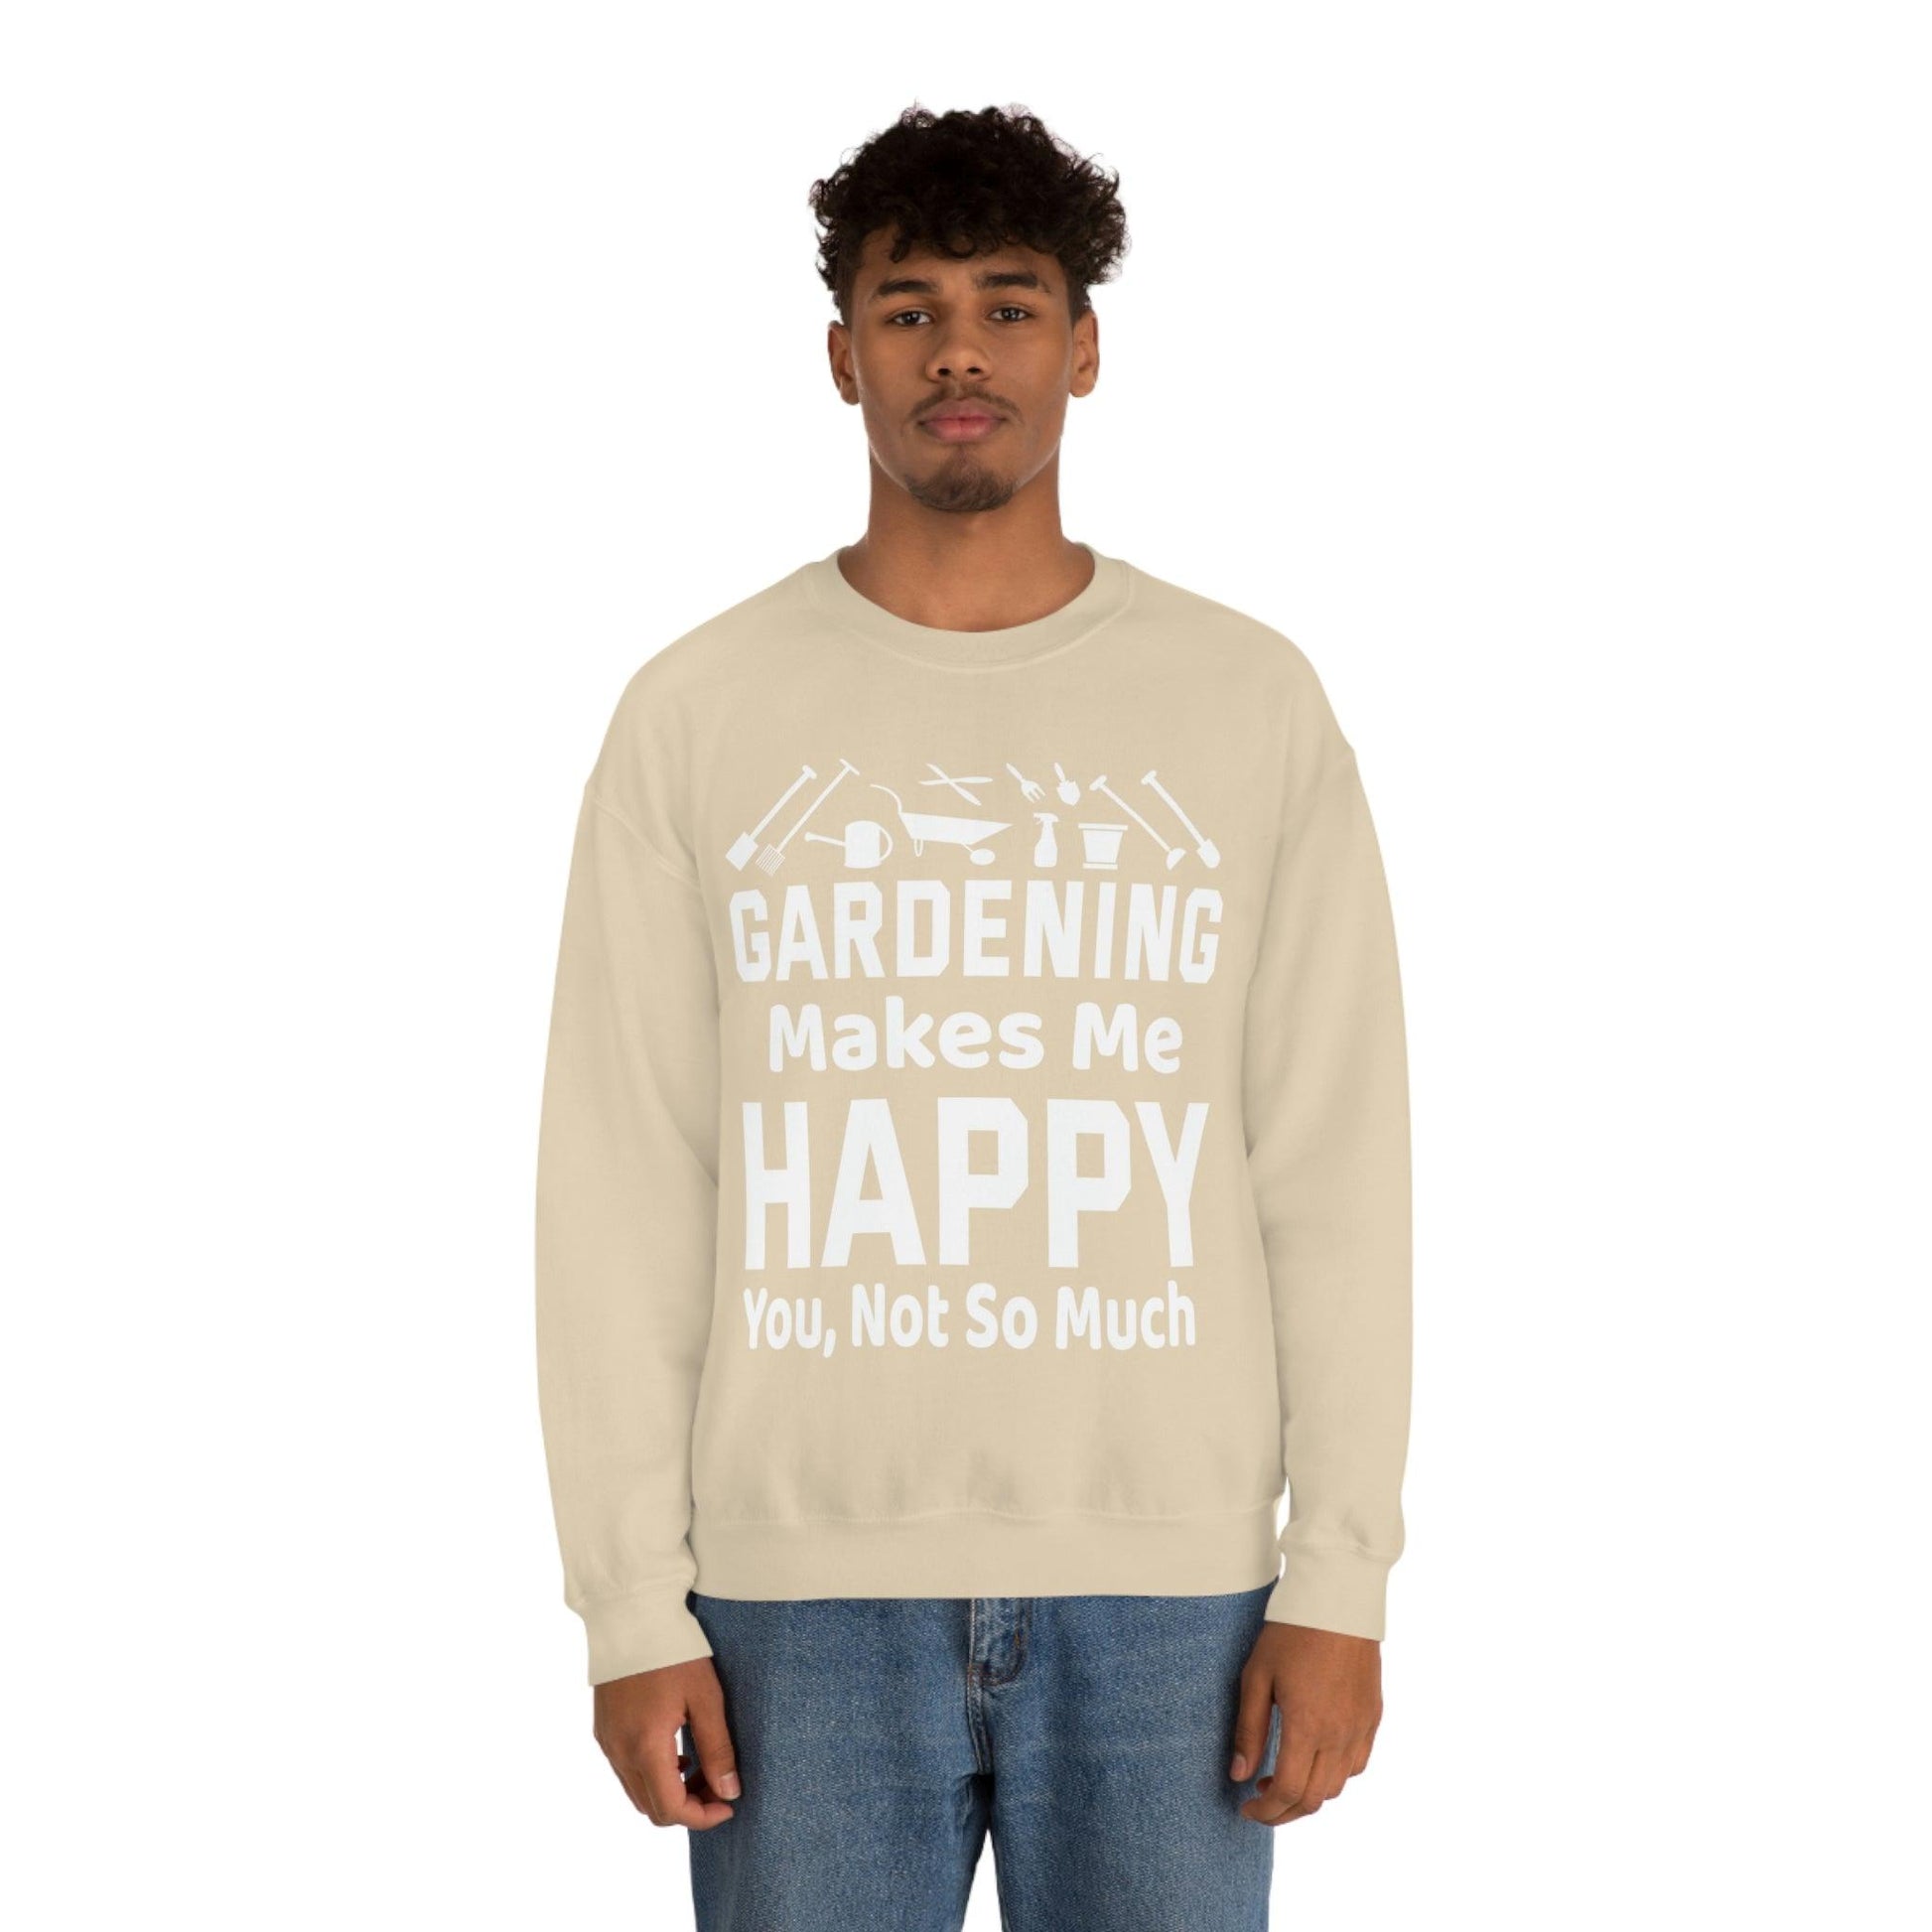 Gardening makes me Happy, You not so much, Garden sweatshirt, great for gardeners, garden shirt, plant lover shirt, nature lover shirt - Giftsmojo